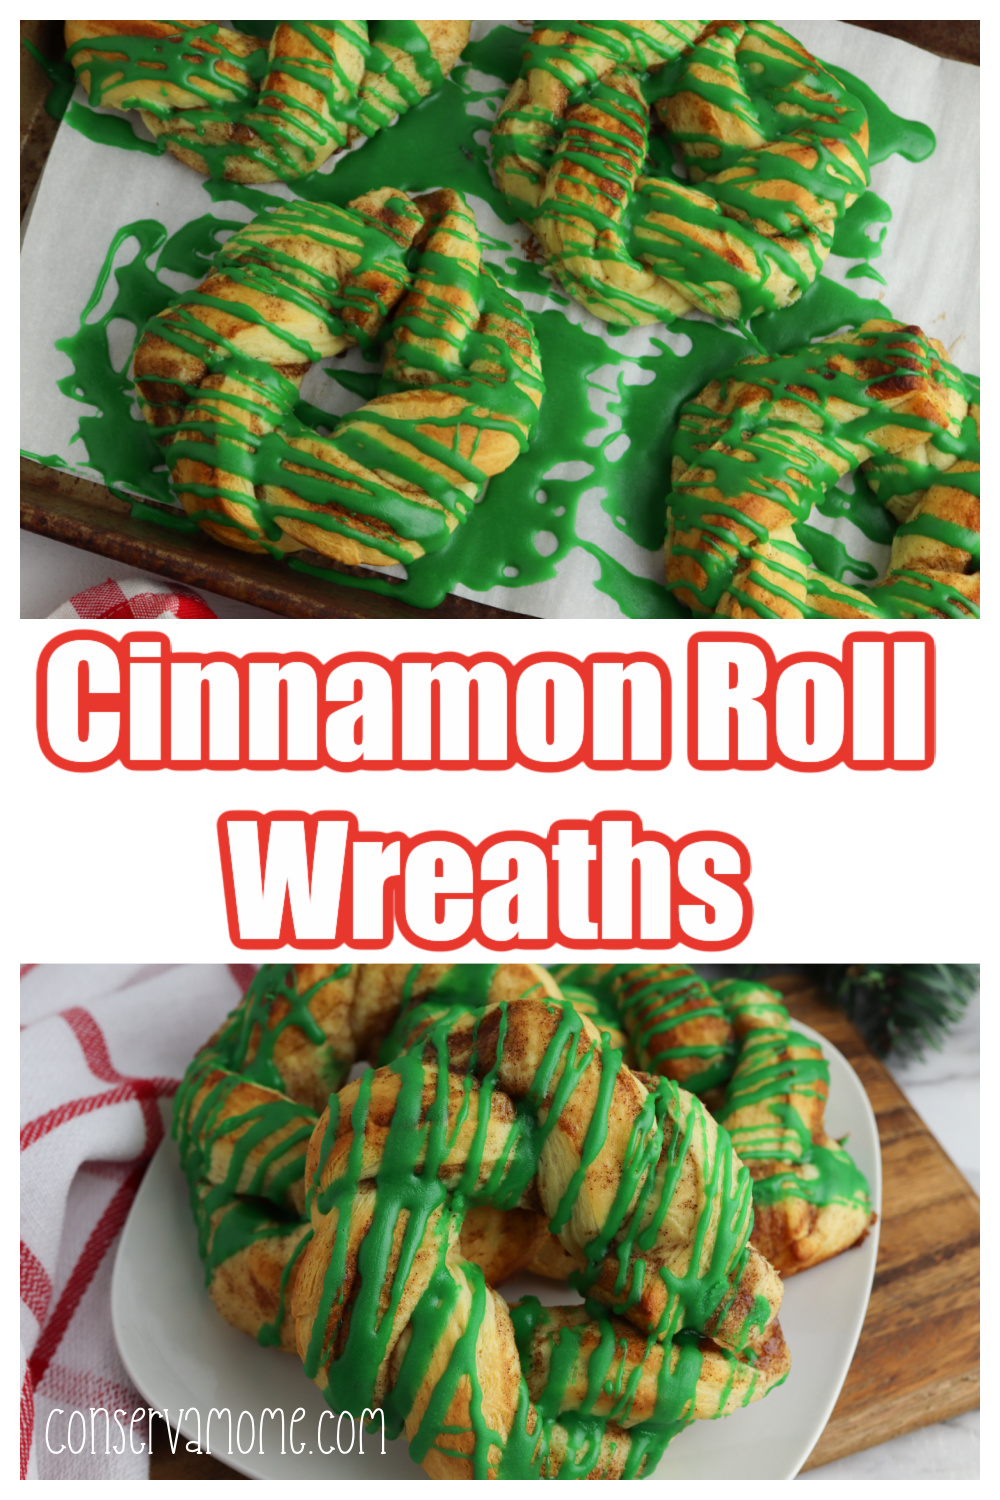 Cinnamon Roll Wreaths: One of the best holiday breakfast ideas